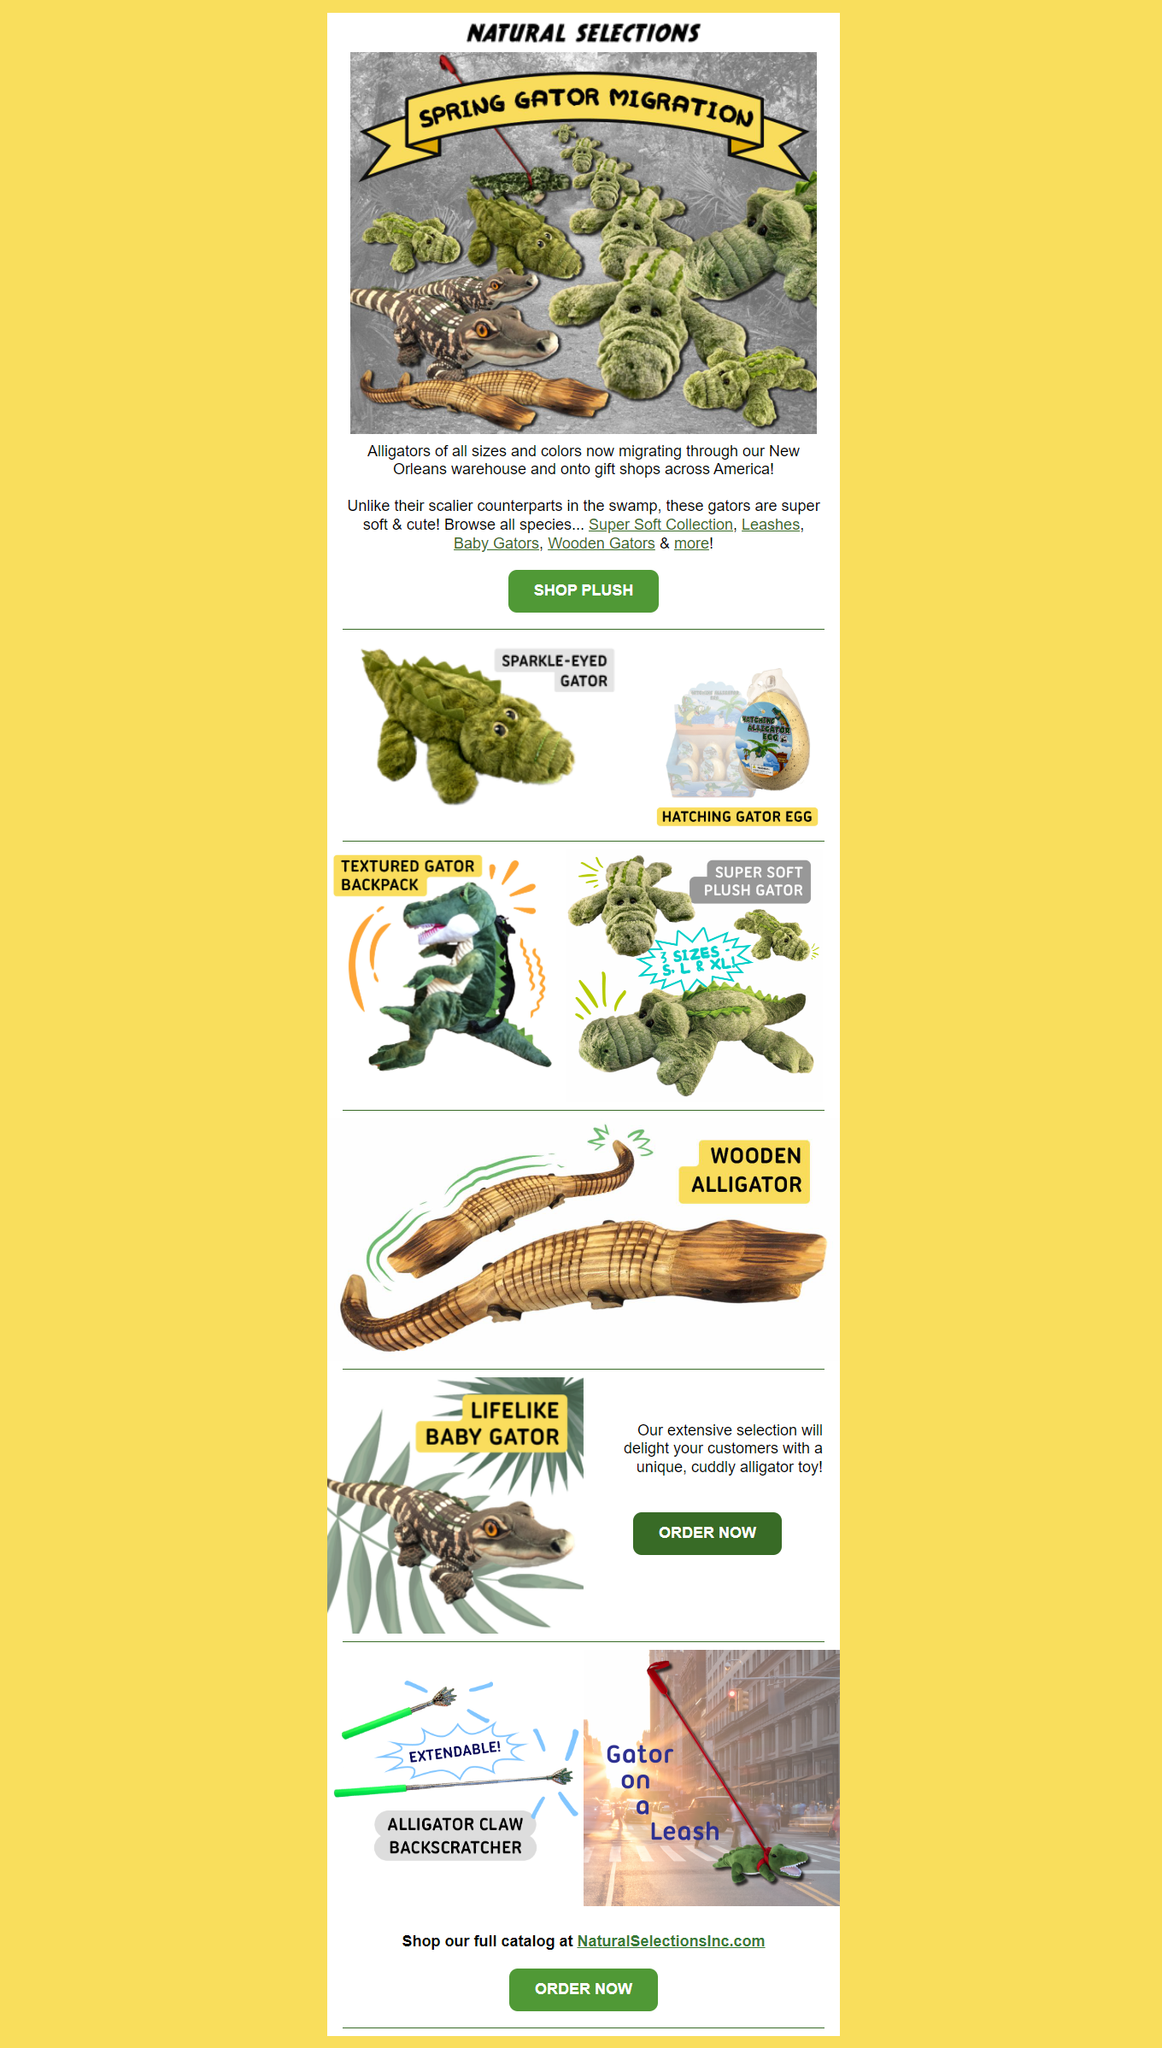 Plush alligator toys back-in-stock